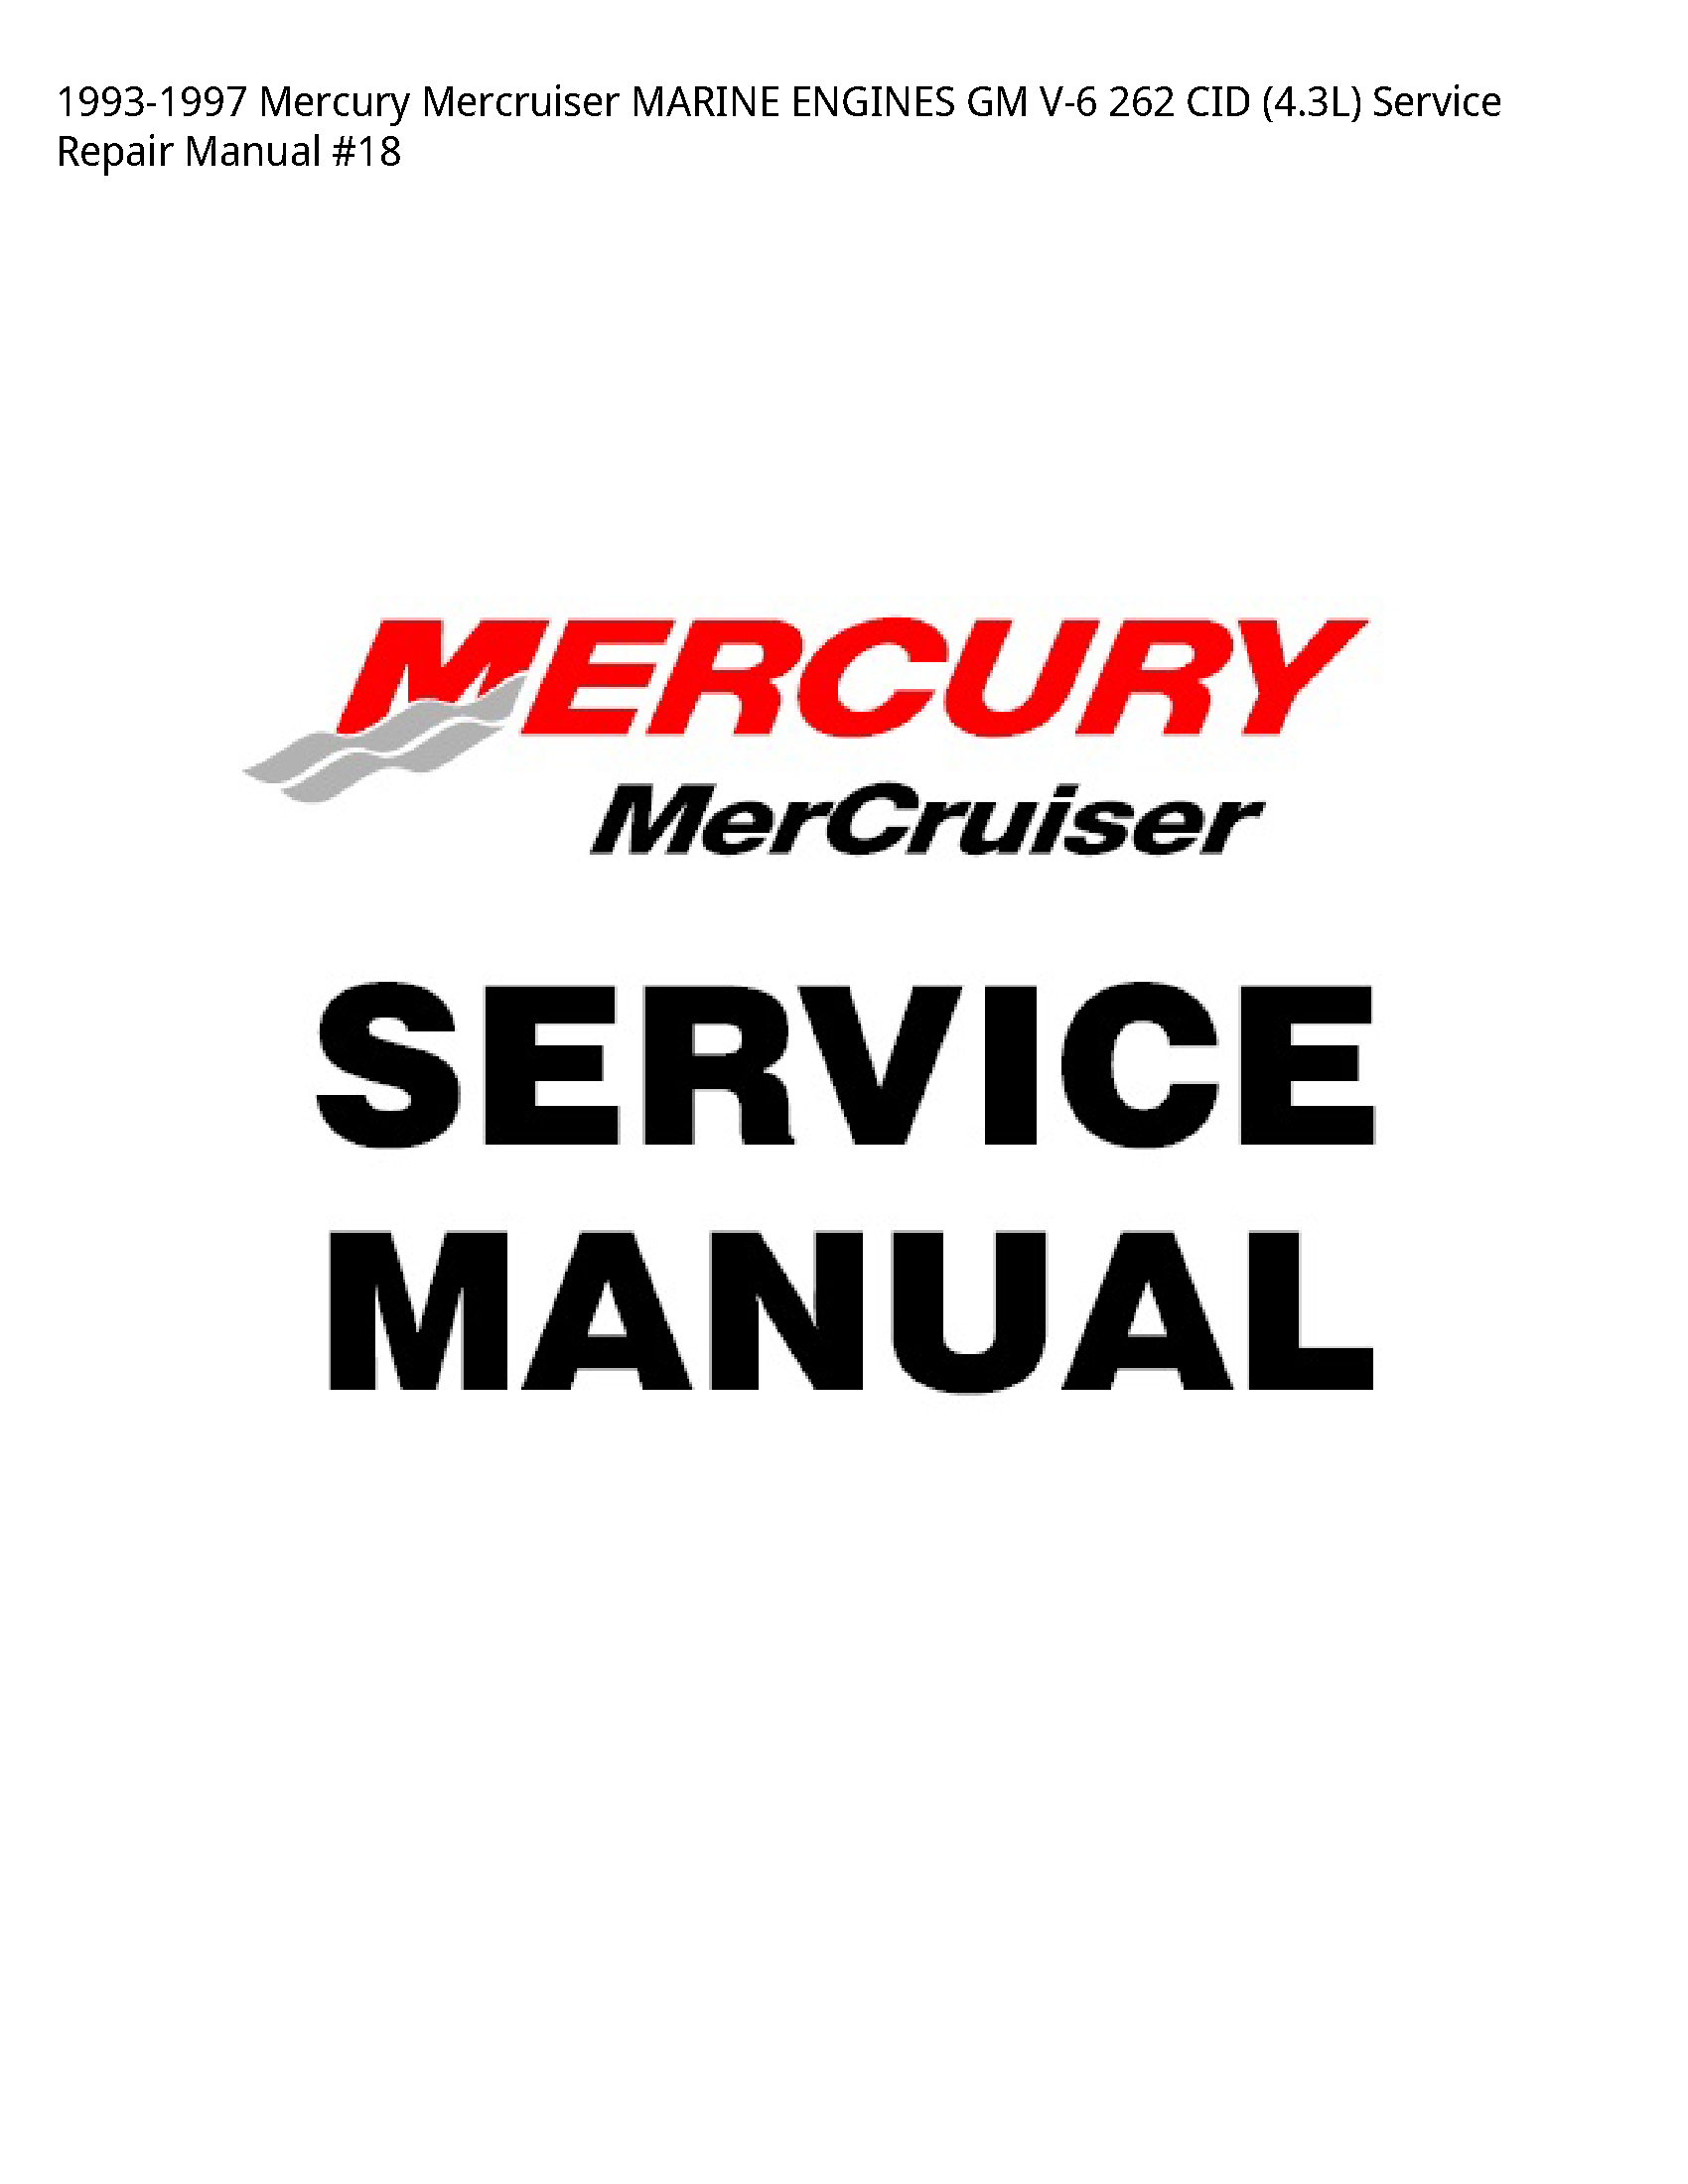 Mercury V-6 Mercruiser MARINE ENGINES GM CID manual